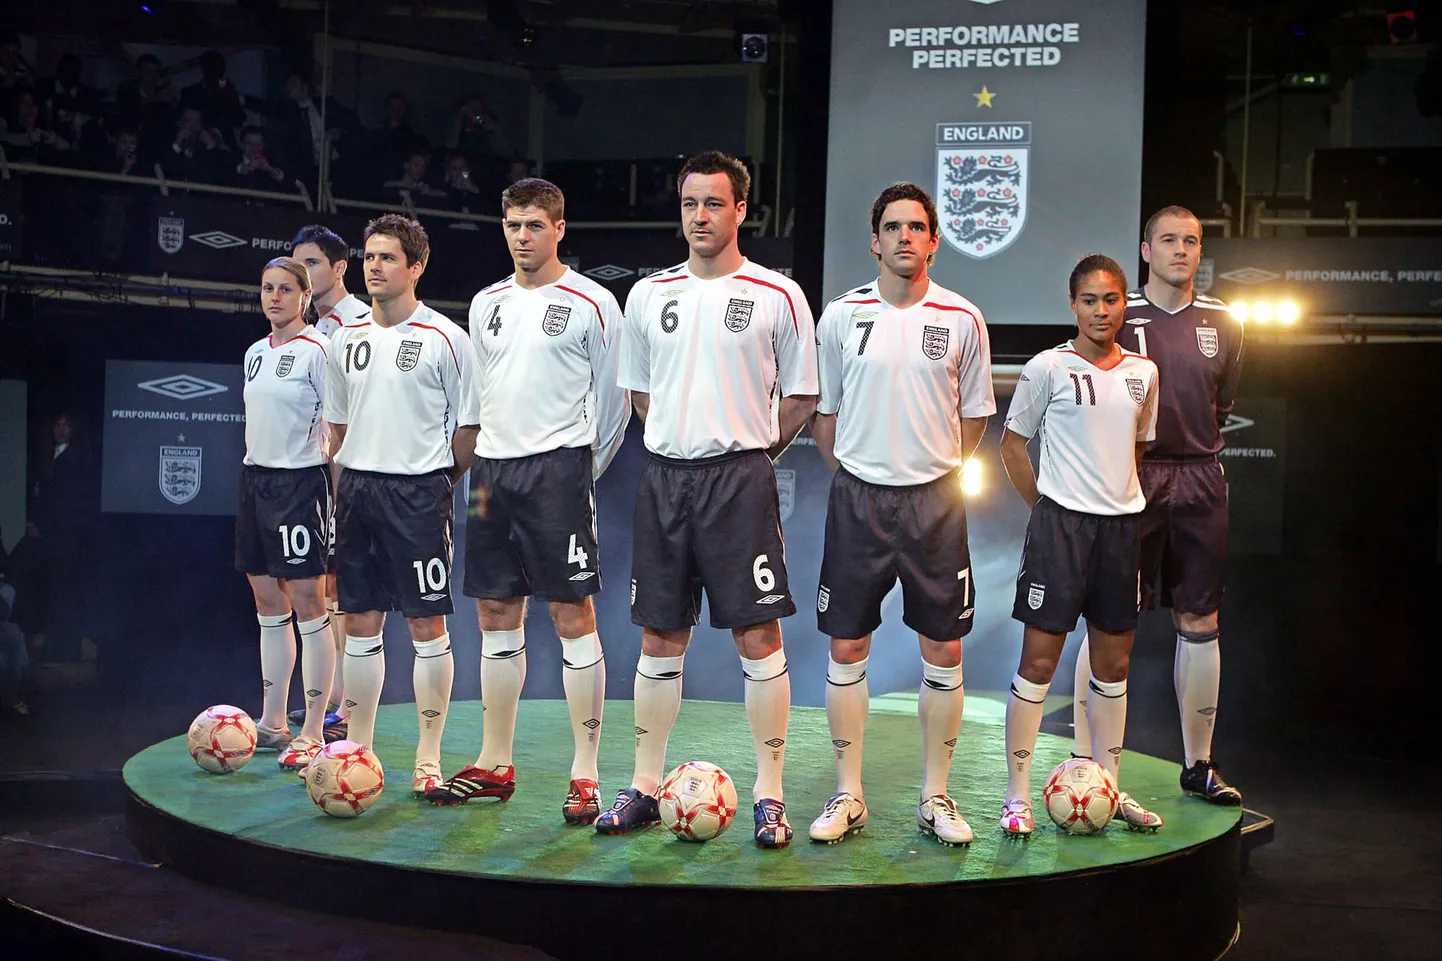 Frank Lampard, Kelly Smith, Michael Owen, Steven Gerrard, John Terry, Owen Hargreaves, Rachel Yankey ja Paul Robinson Inglismaa koondise uue jalgpallivarustuse esitlusel.